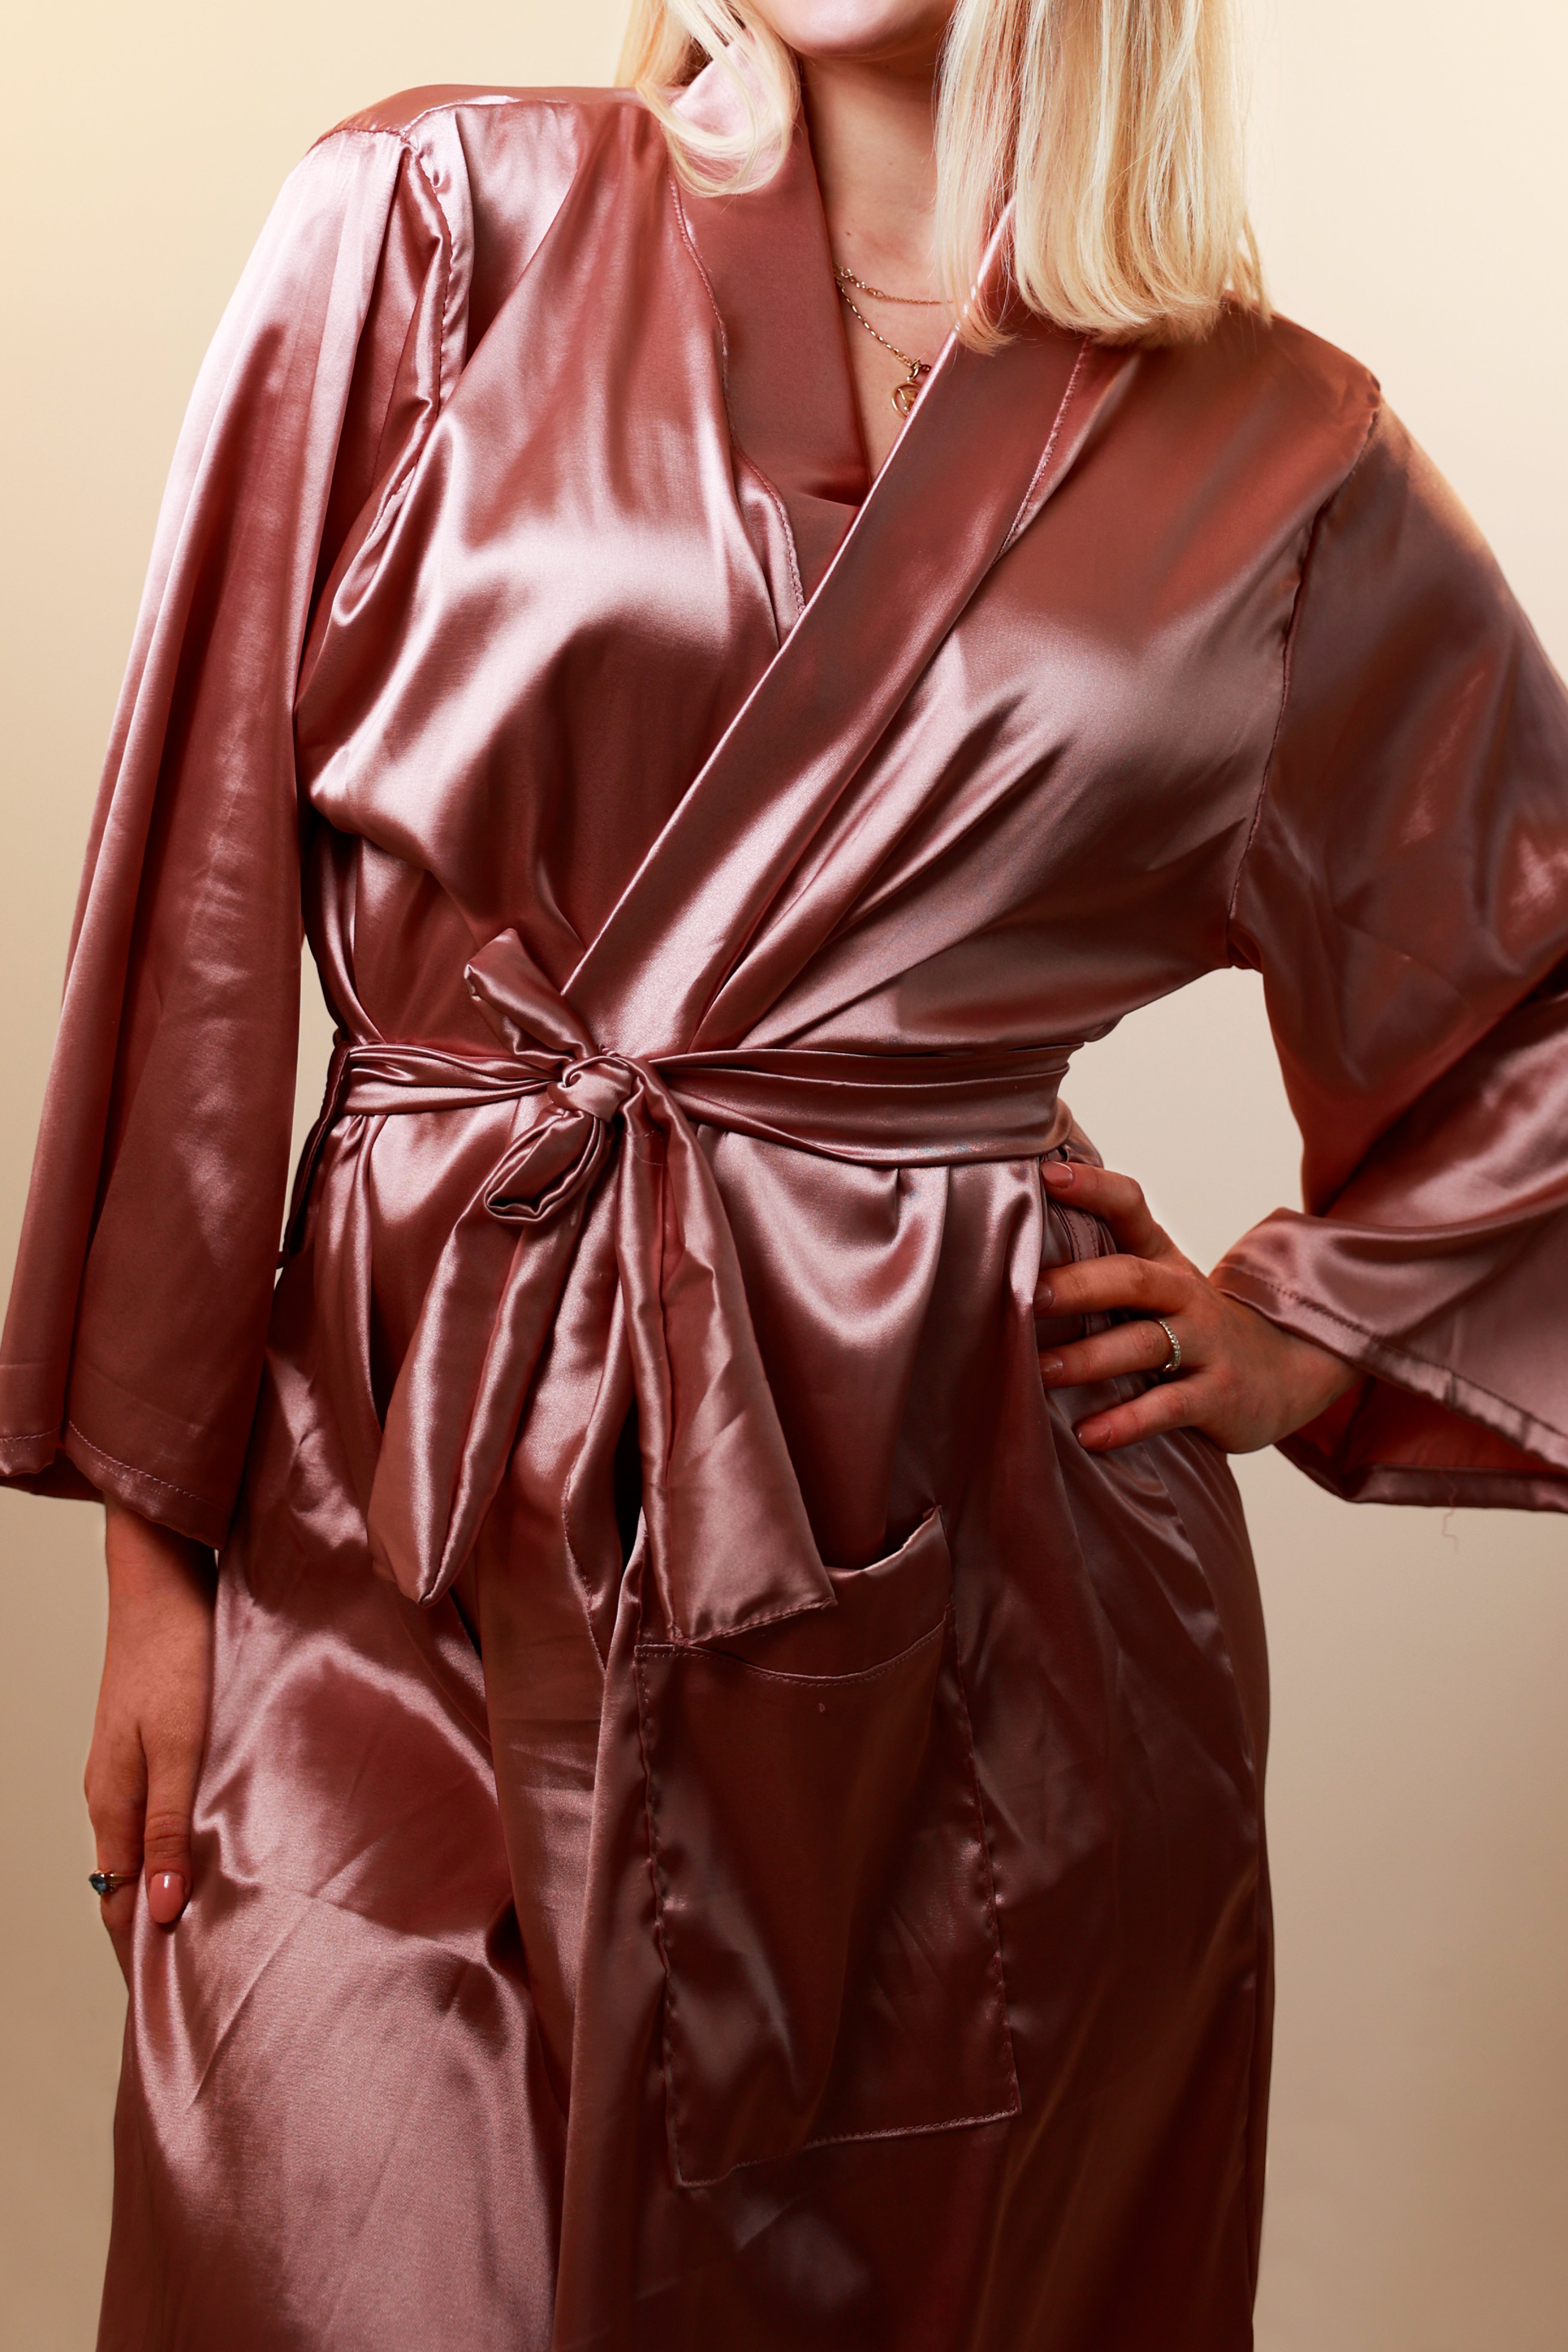 women'secret Dressing gown - rose/pink - Zalando.de